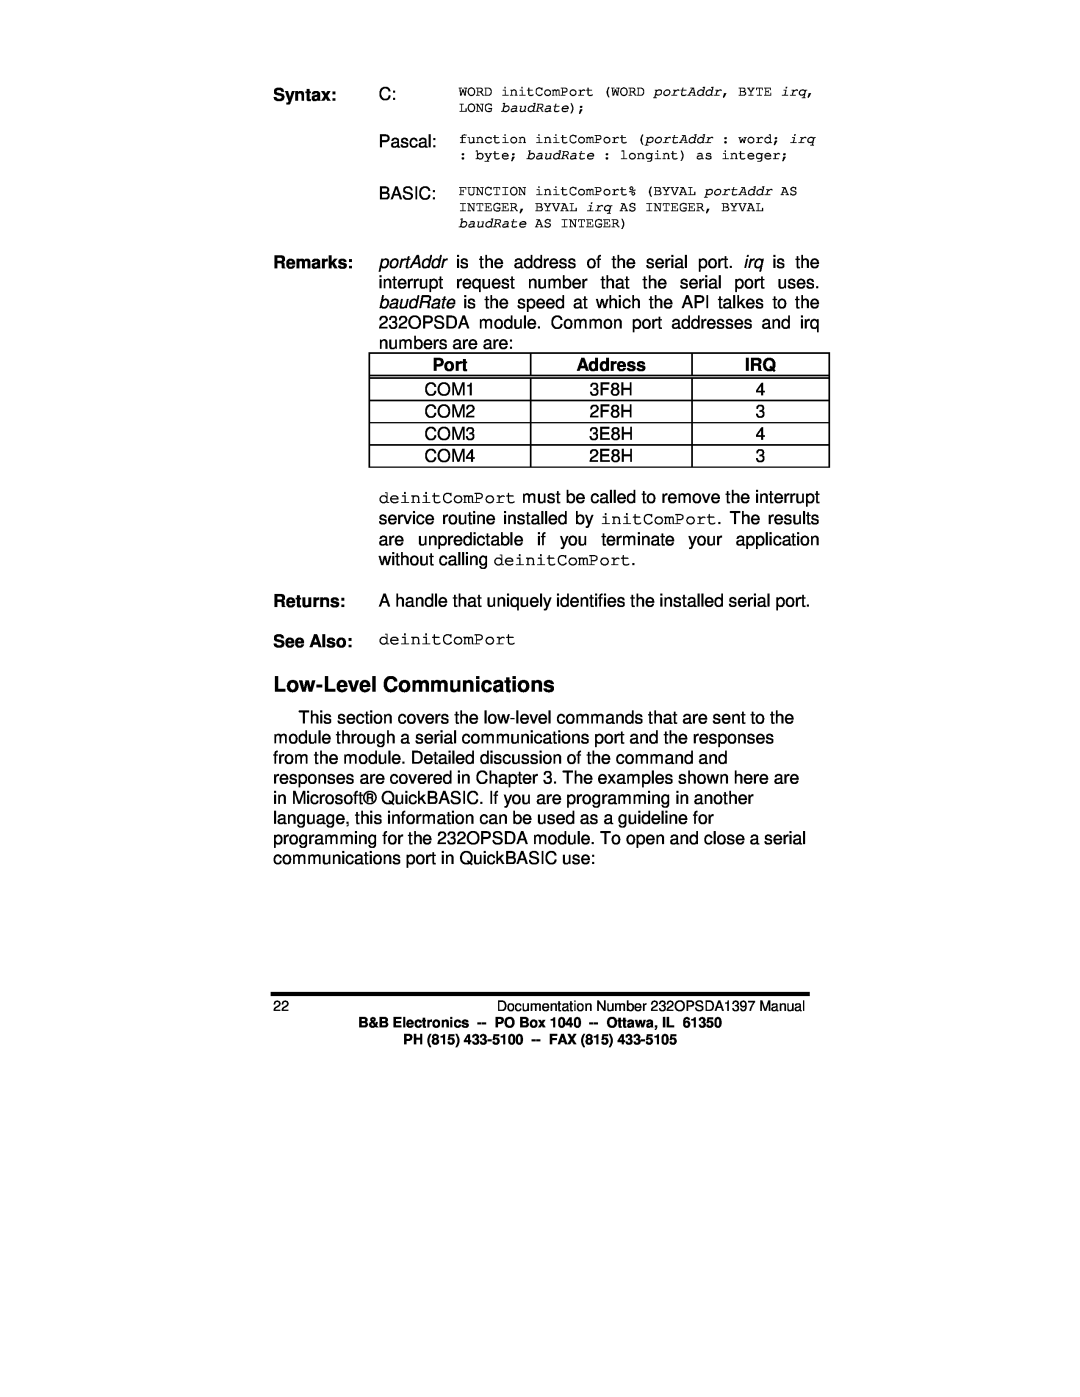 B&B Electronics 232OPSDA manual Low-Level Communications, deinitComPort 